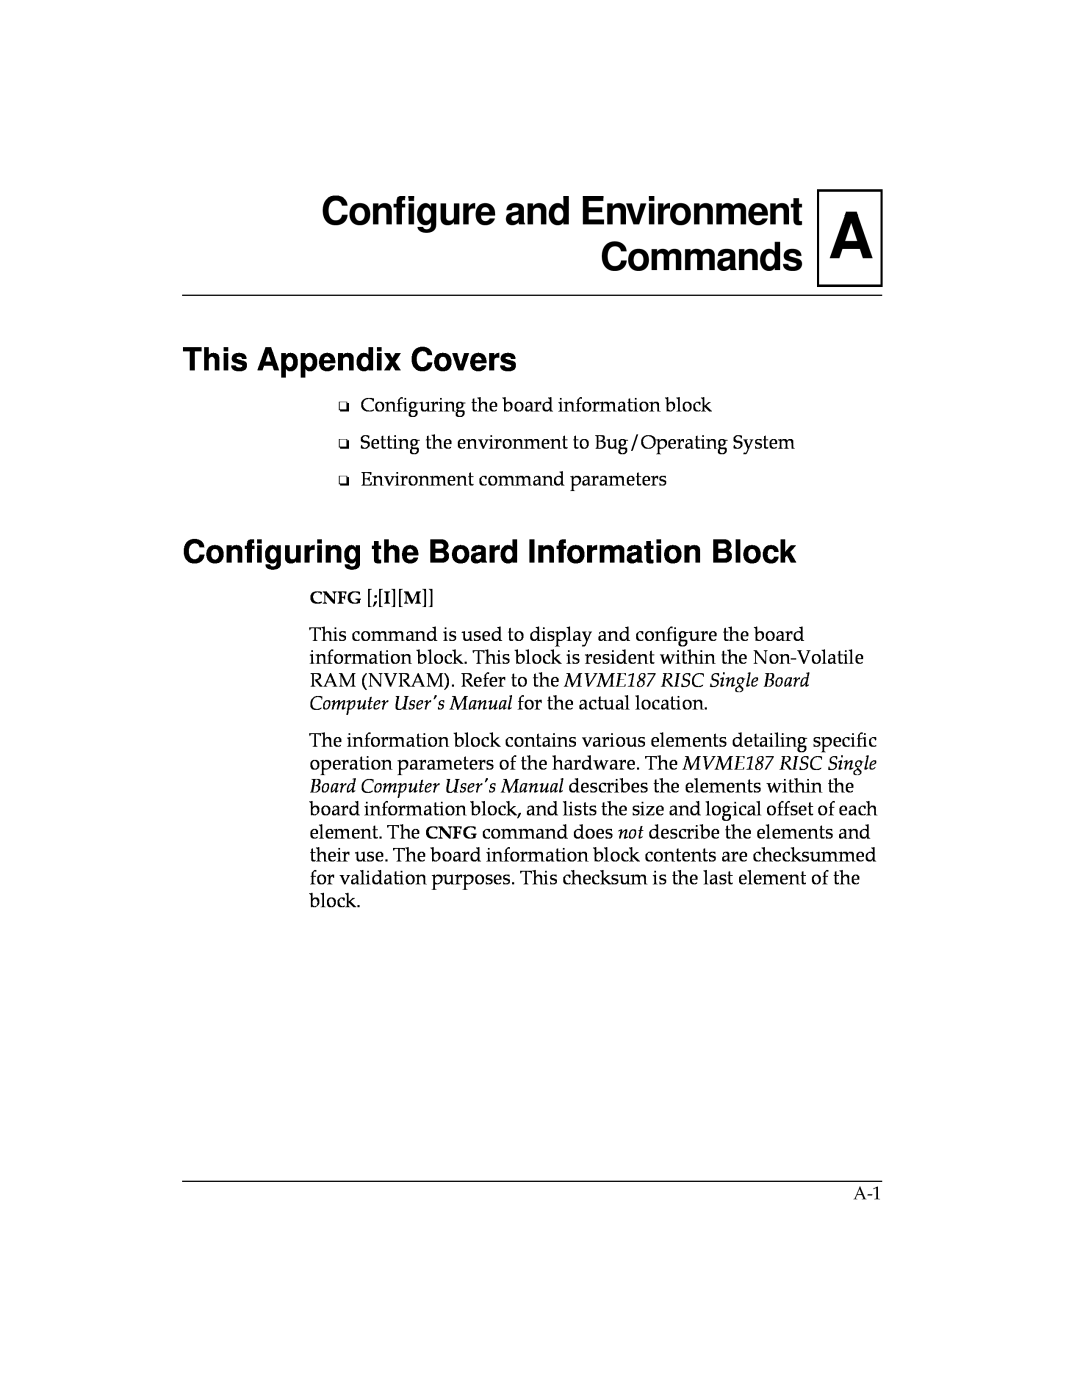 Motorola MVME187 manual AConﬁgure and Environment Commands, This Appendix Covers, Conﬁguring the Board Information Block 